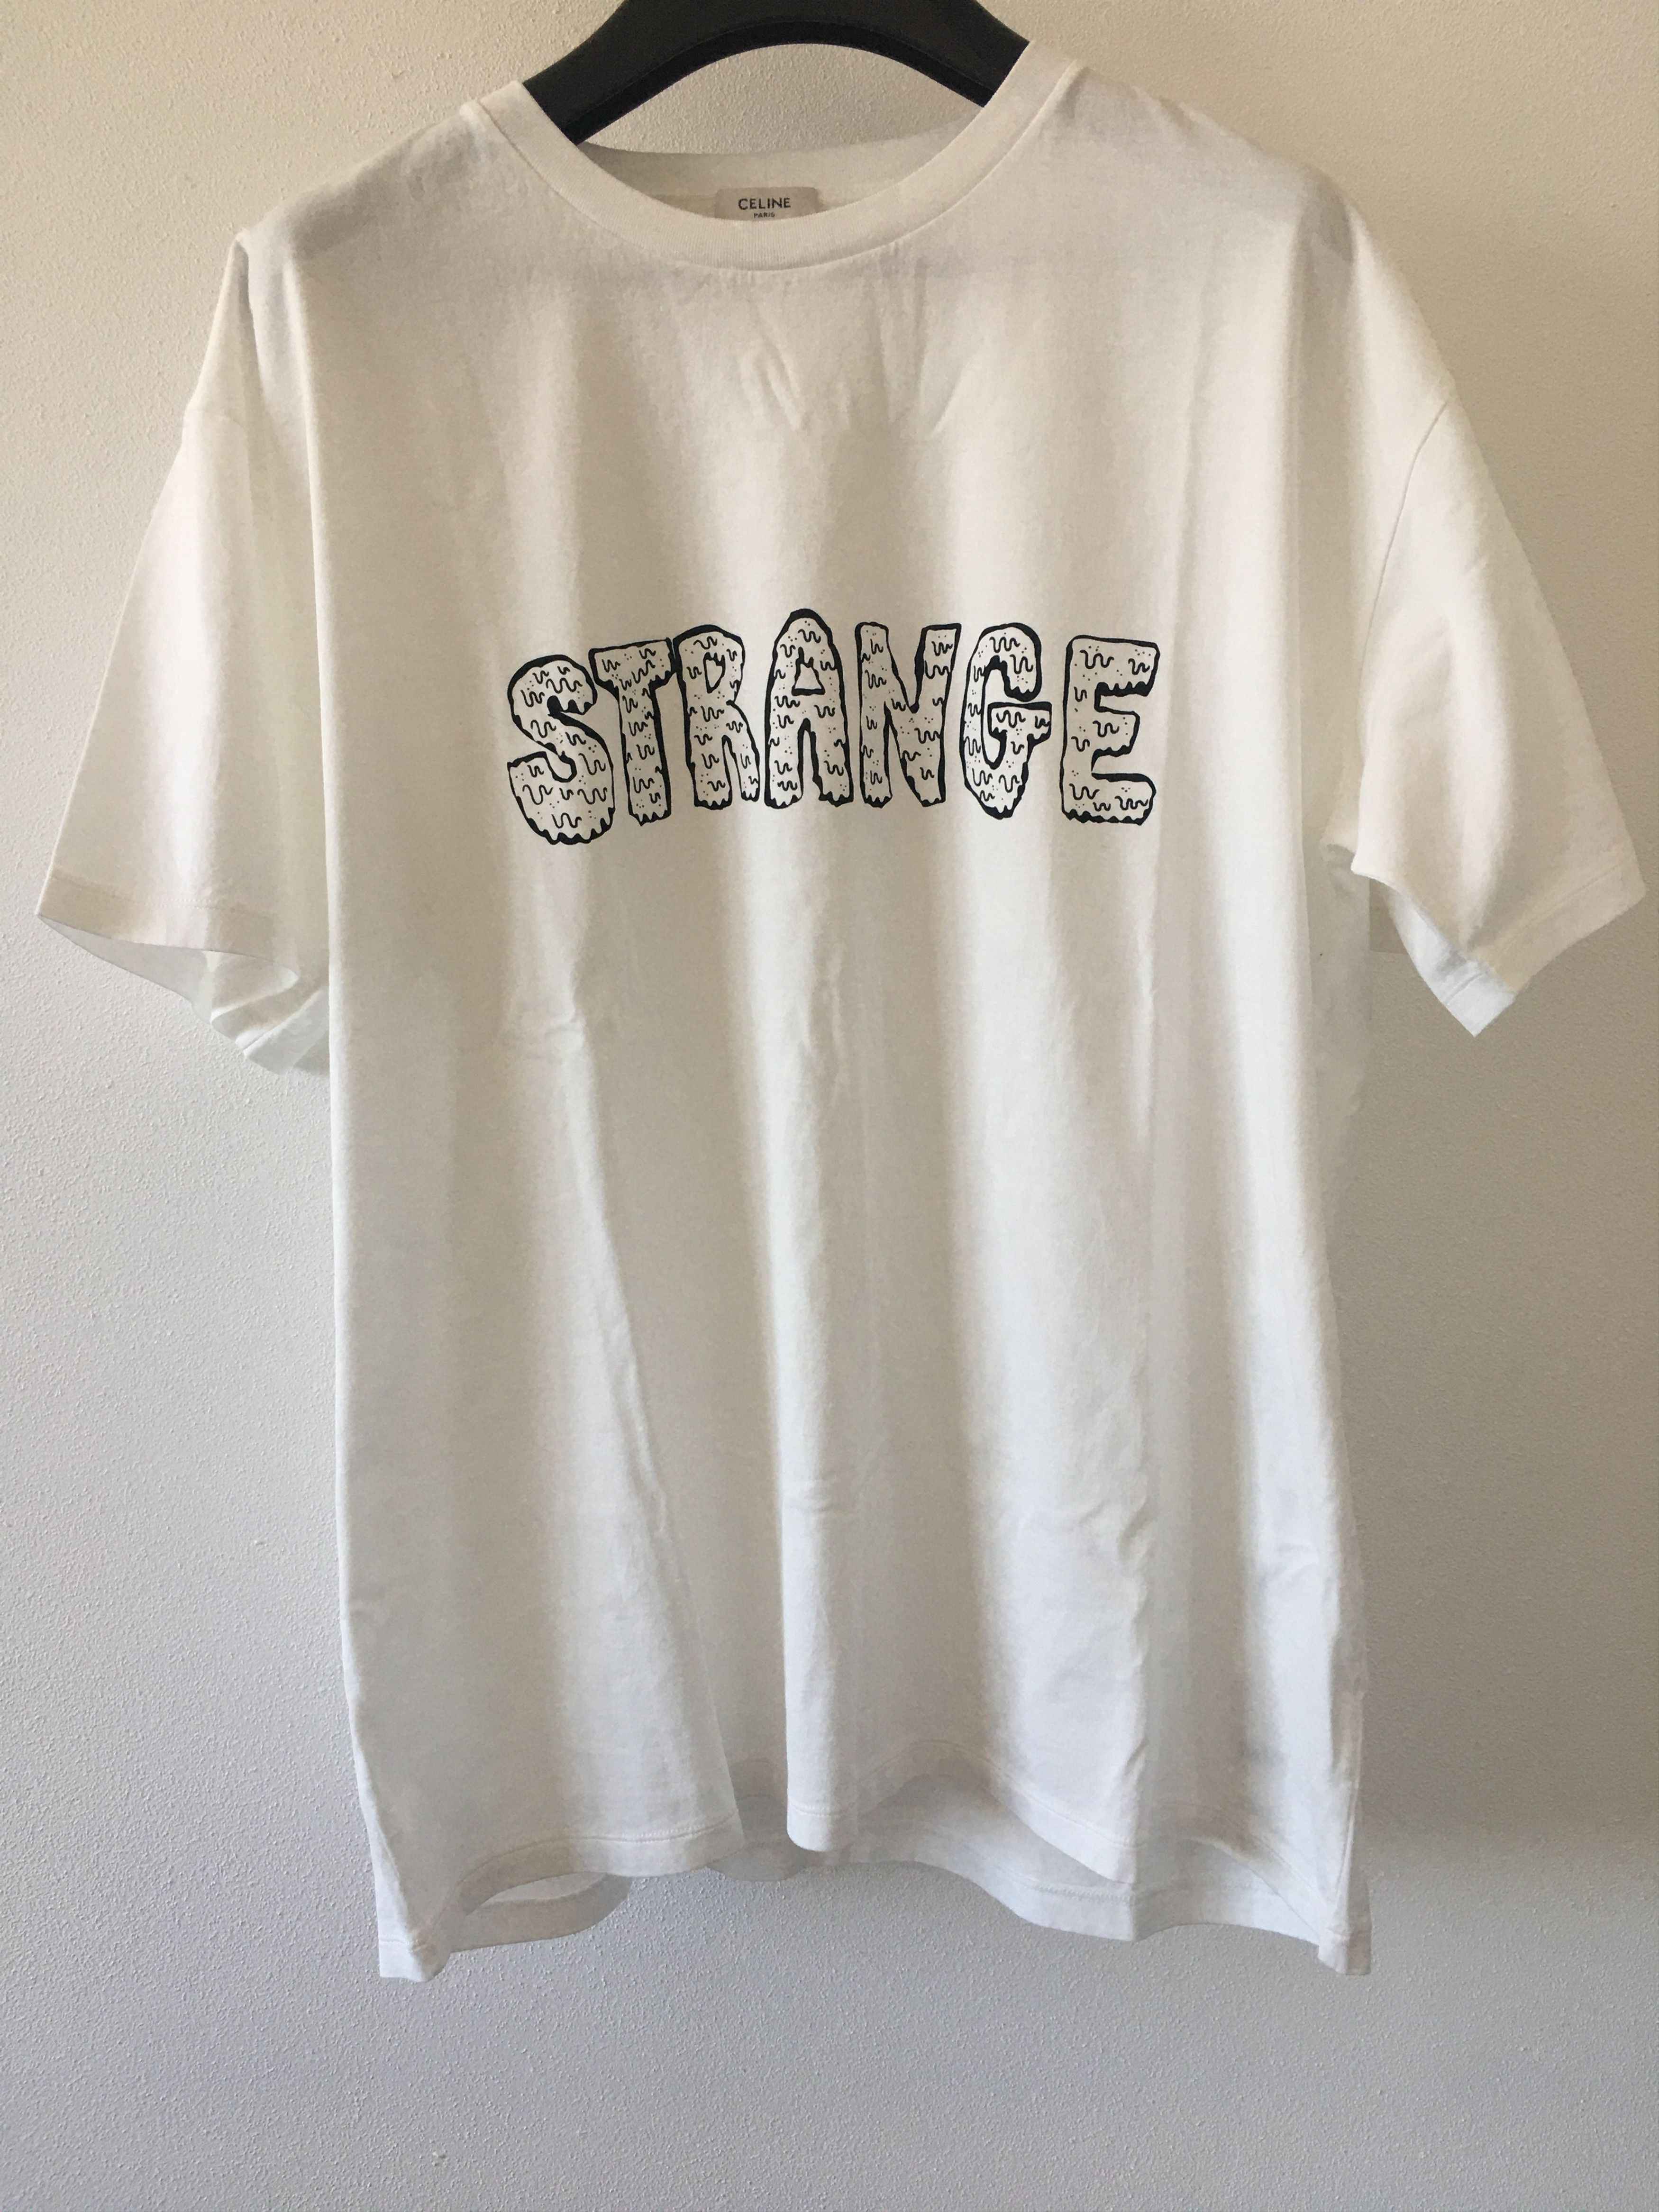 Celine FINAL DROP / SS'21 T-shirts STRANGE Print | Grailed